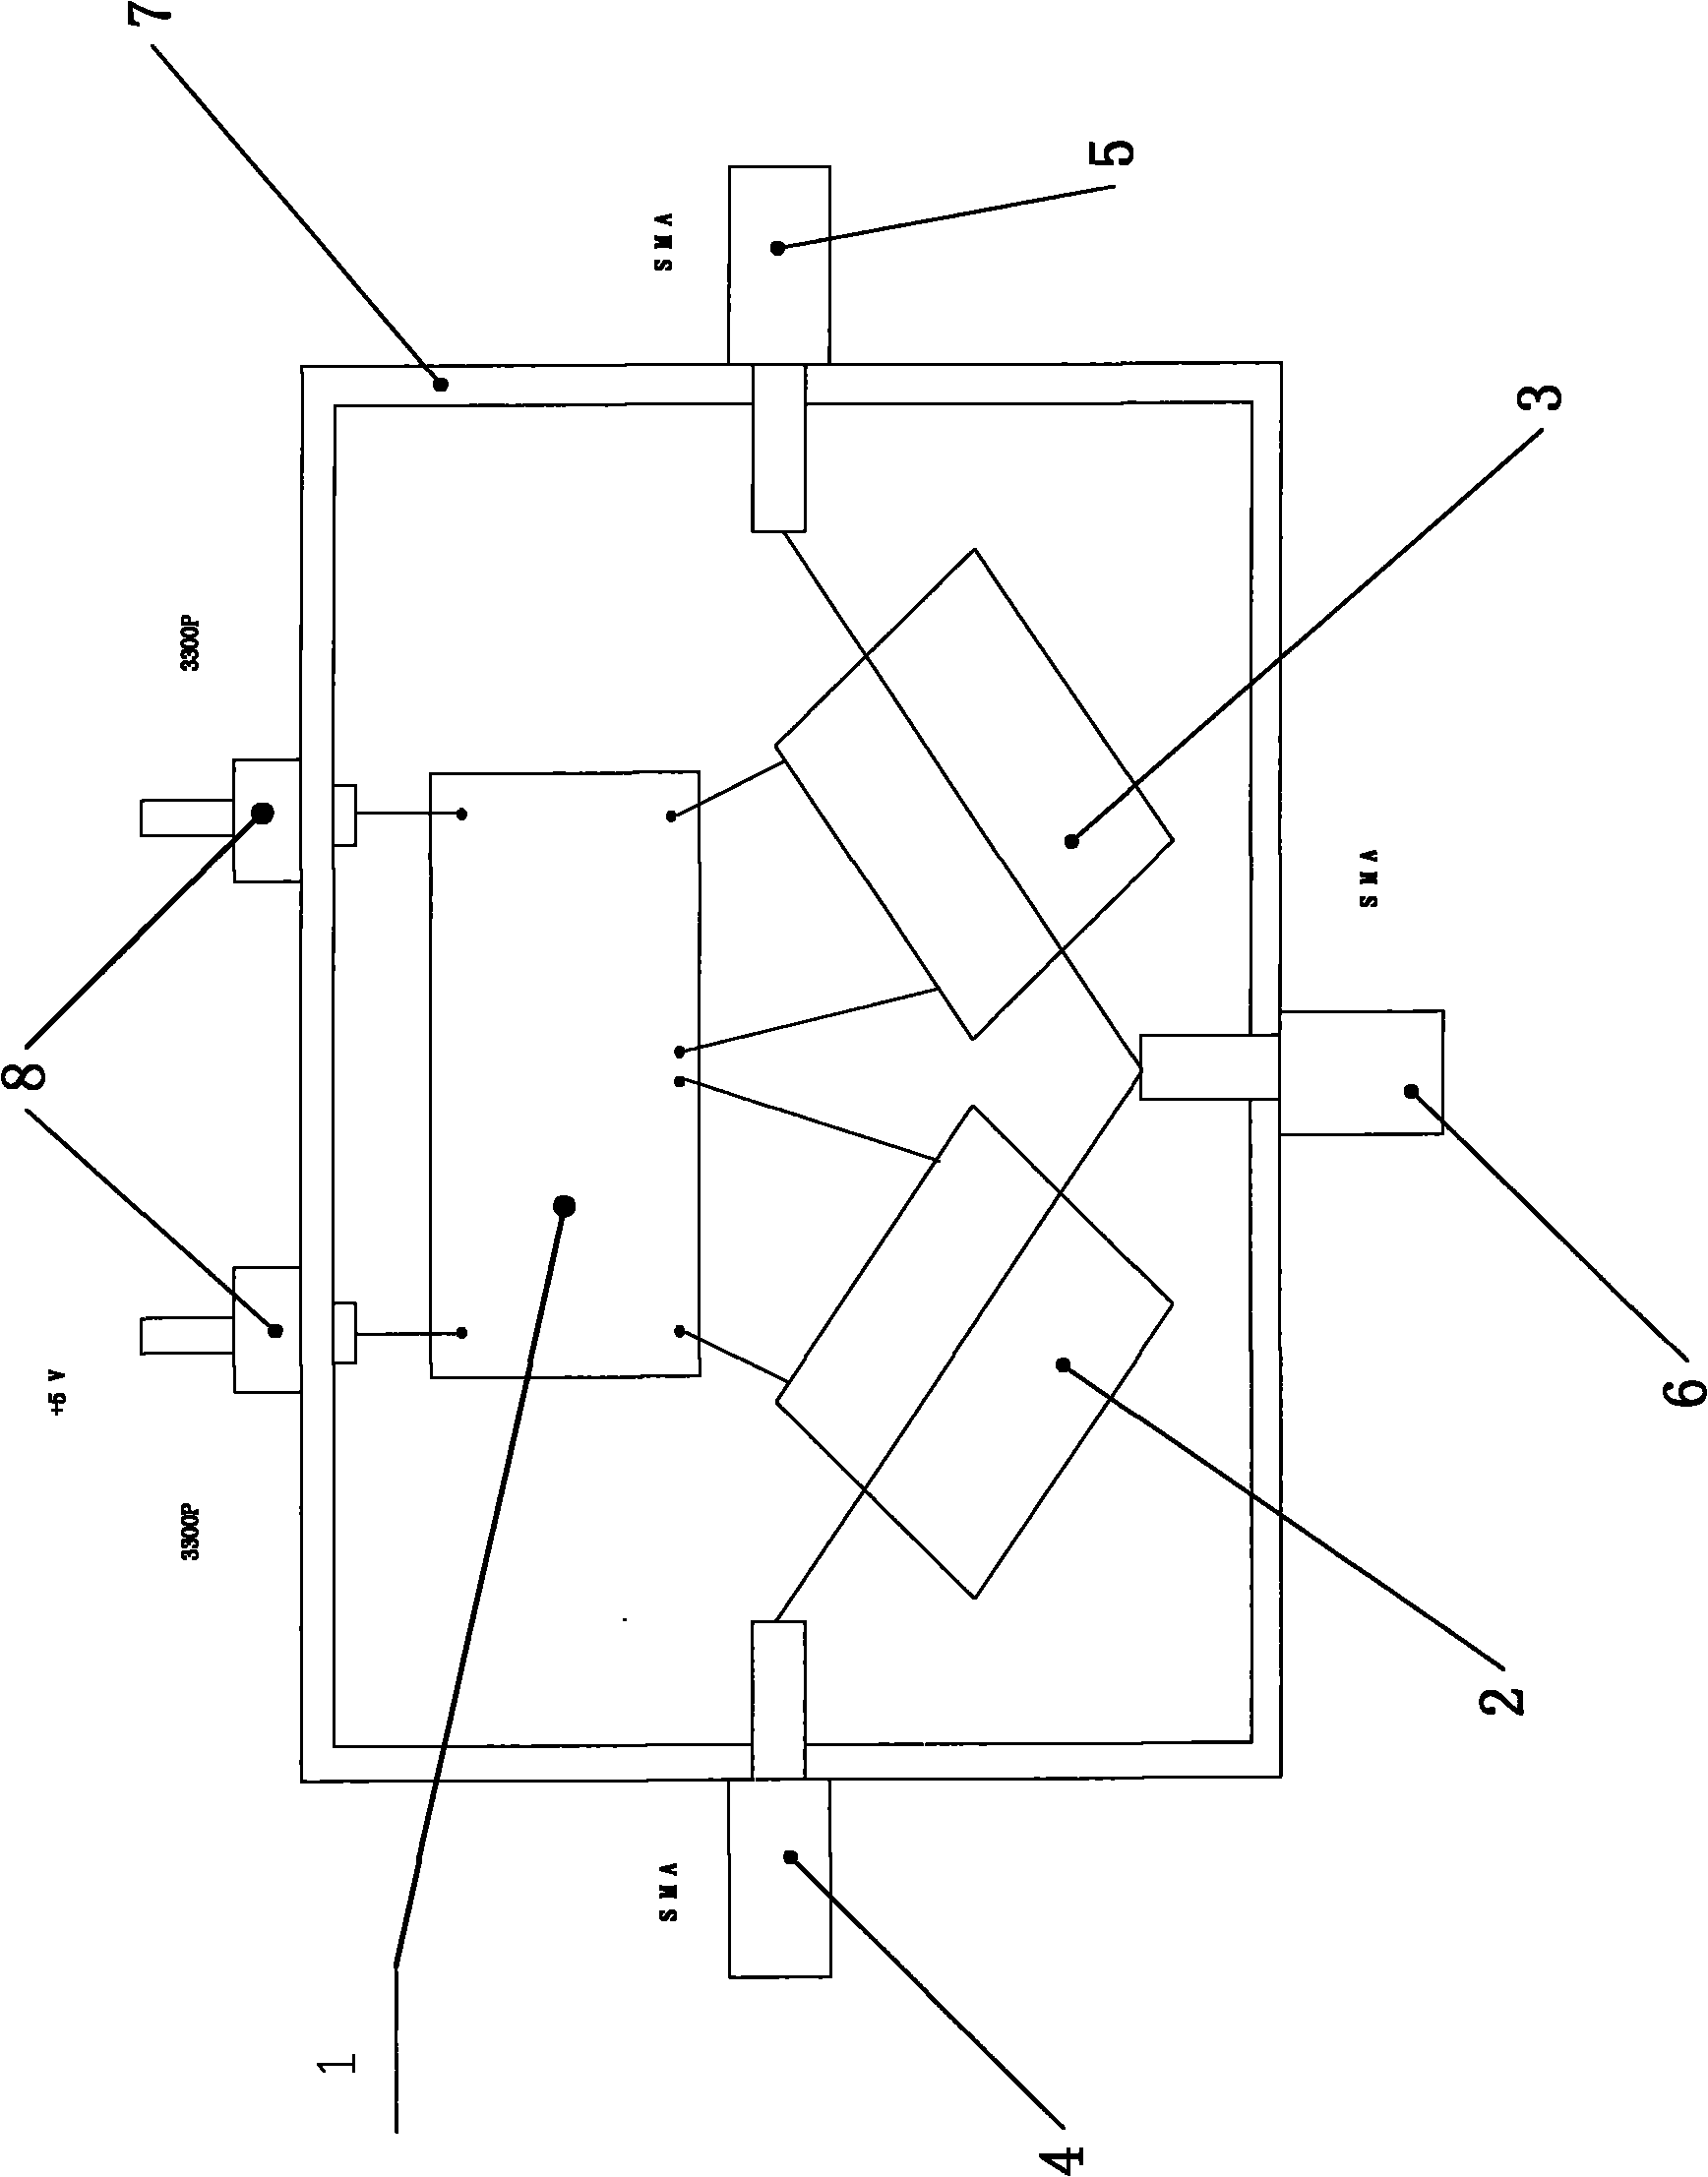 Three-terminal modulator for lower-frequency modulating type radiometer receiver